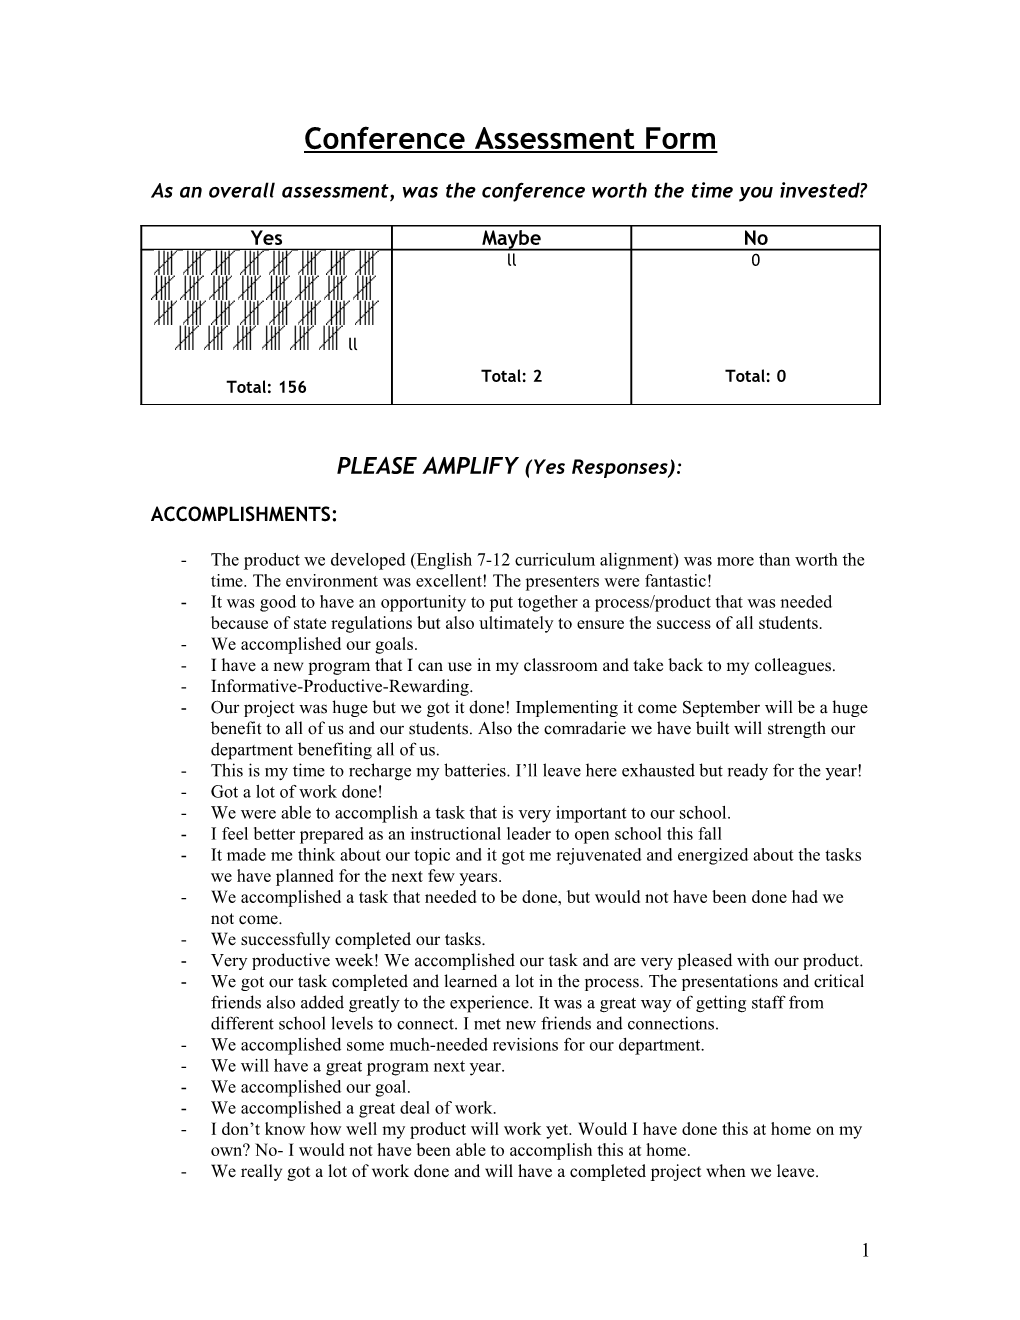 Conference Assessment Form